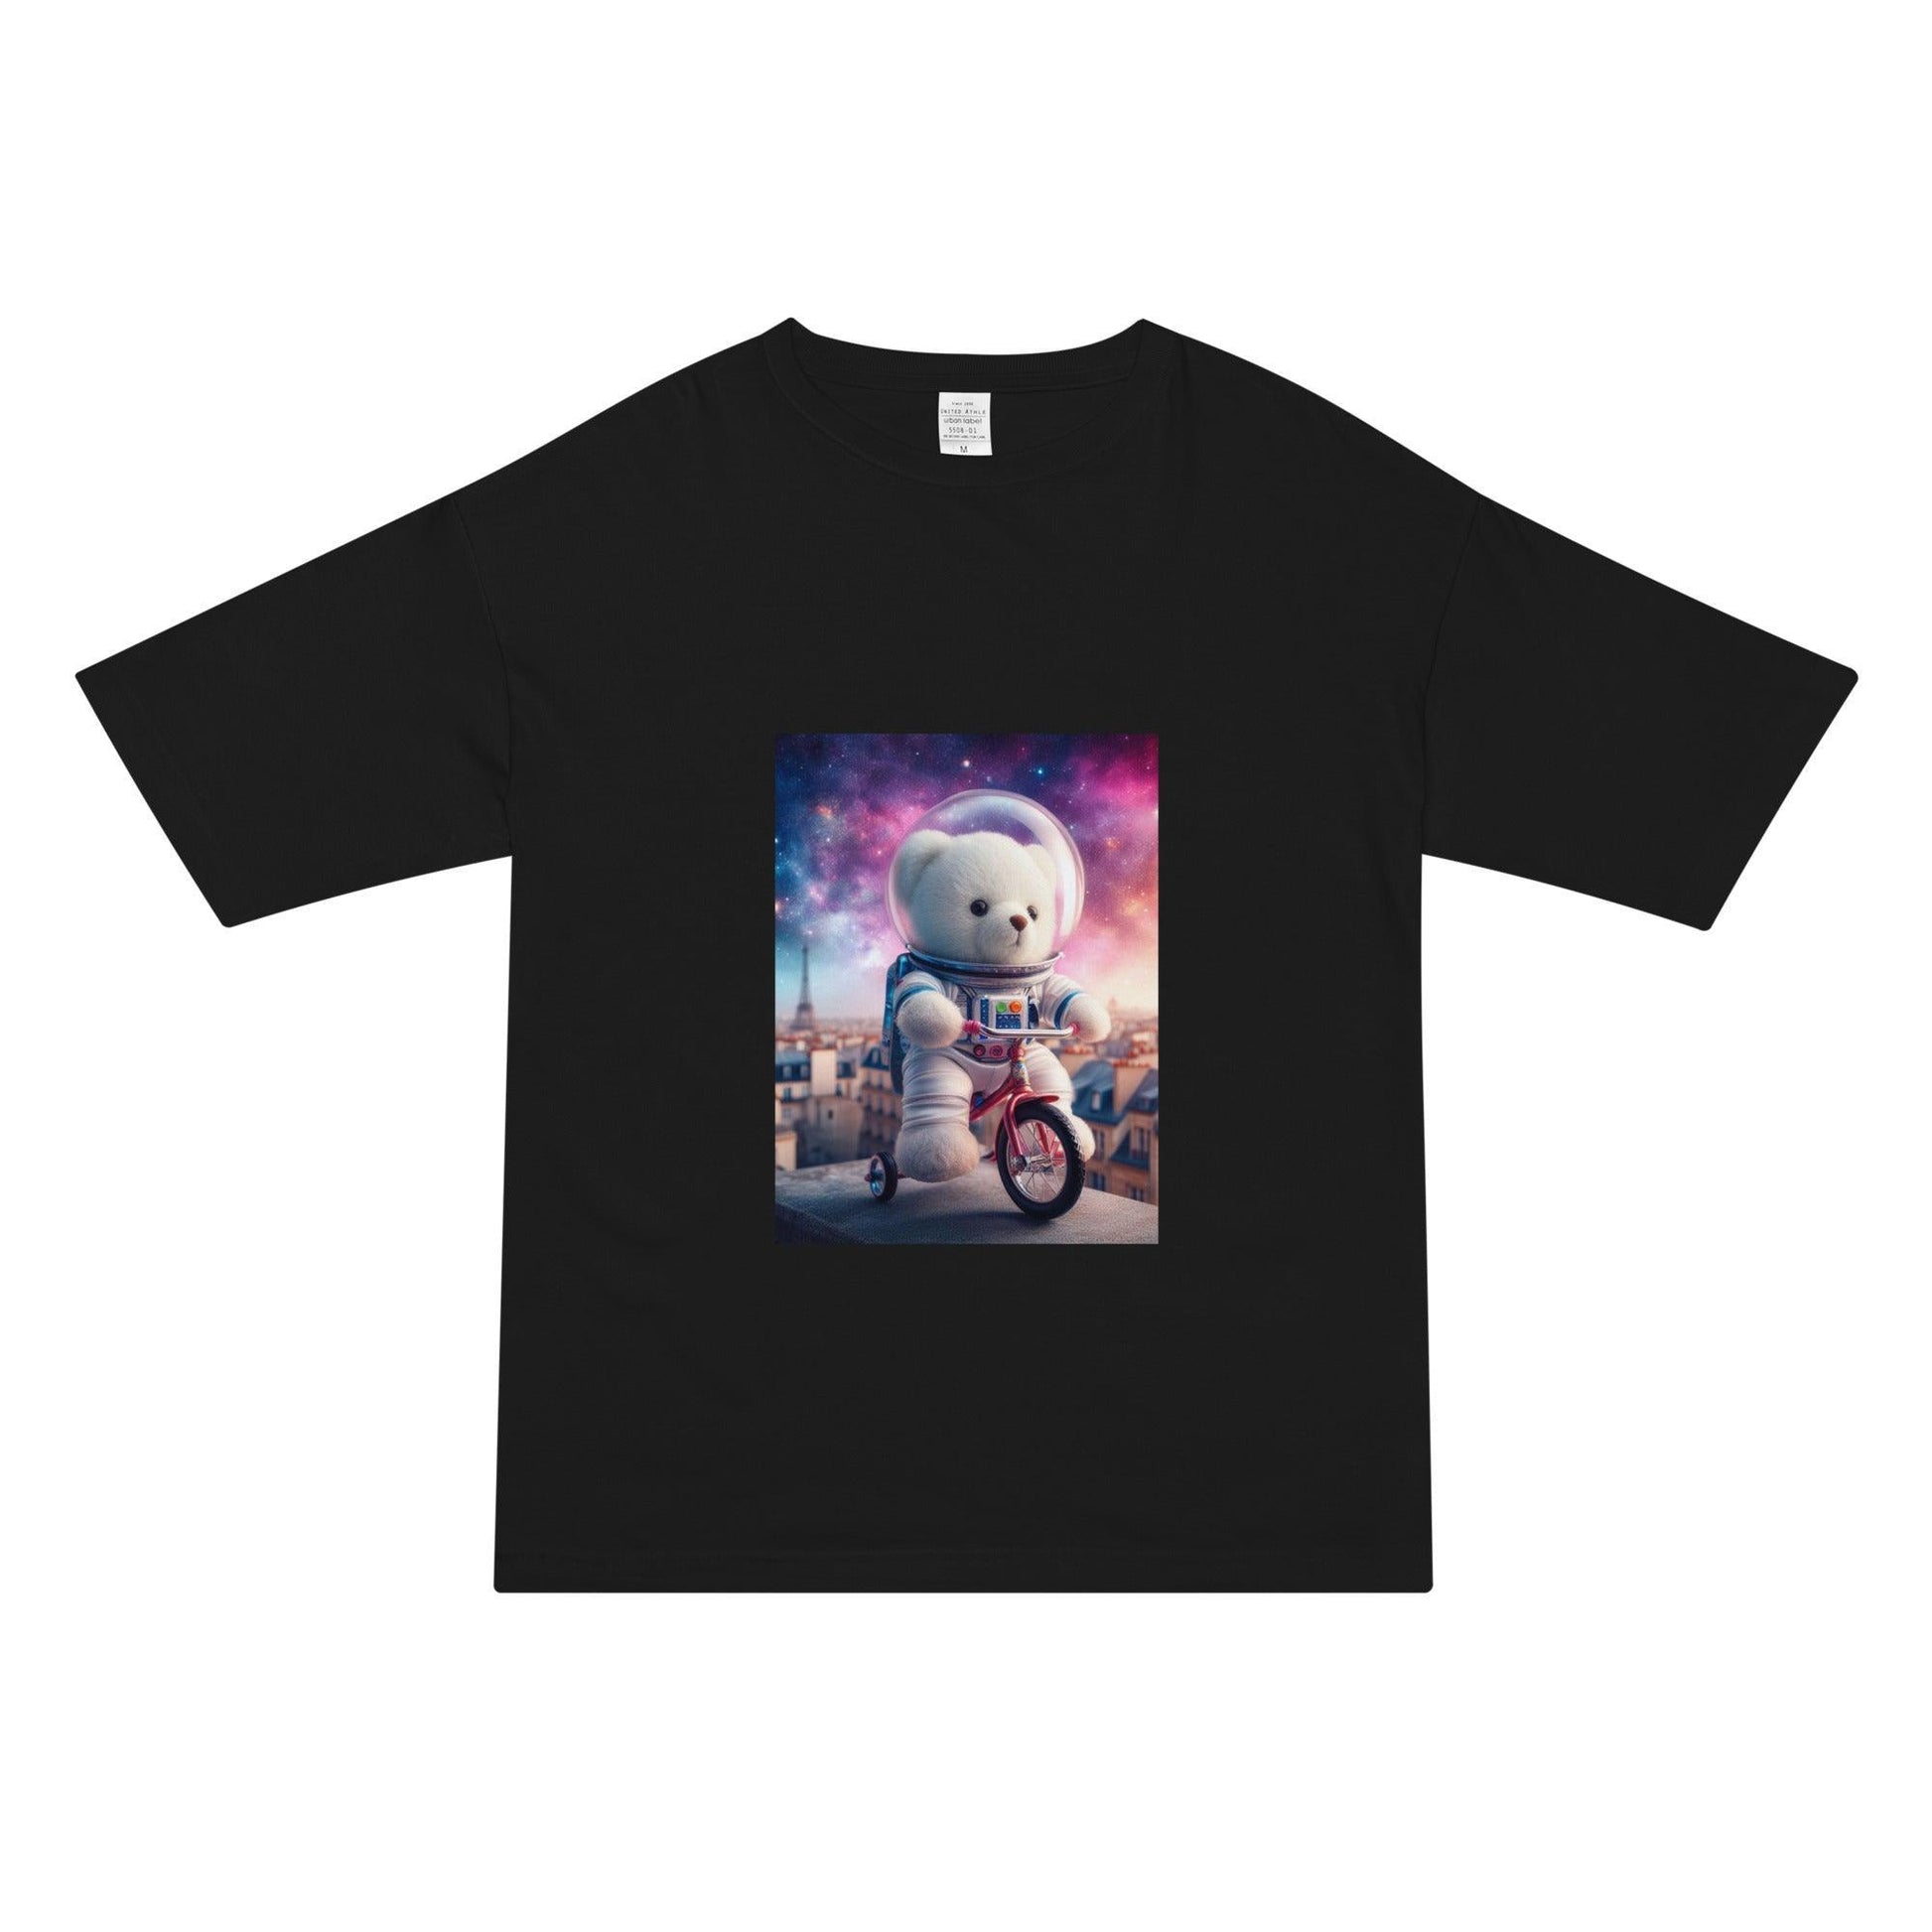 Parisian Dawn Astrogalactic T-Shirt Black - ROSE Society